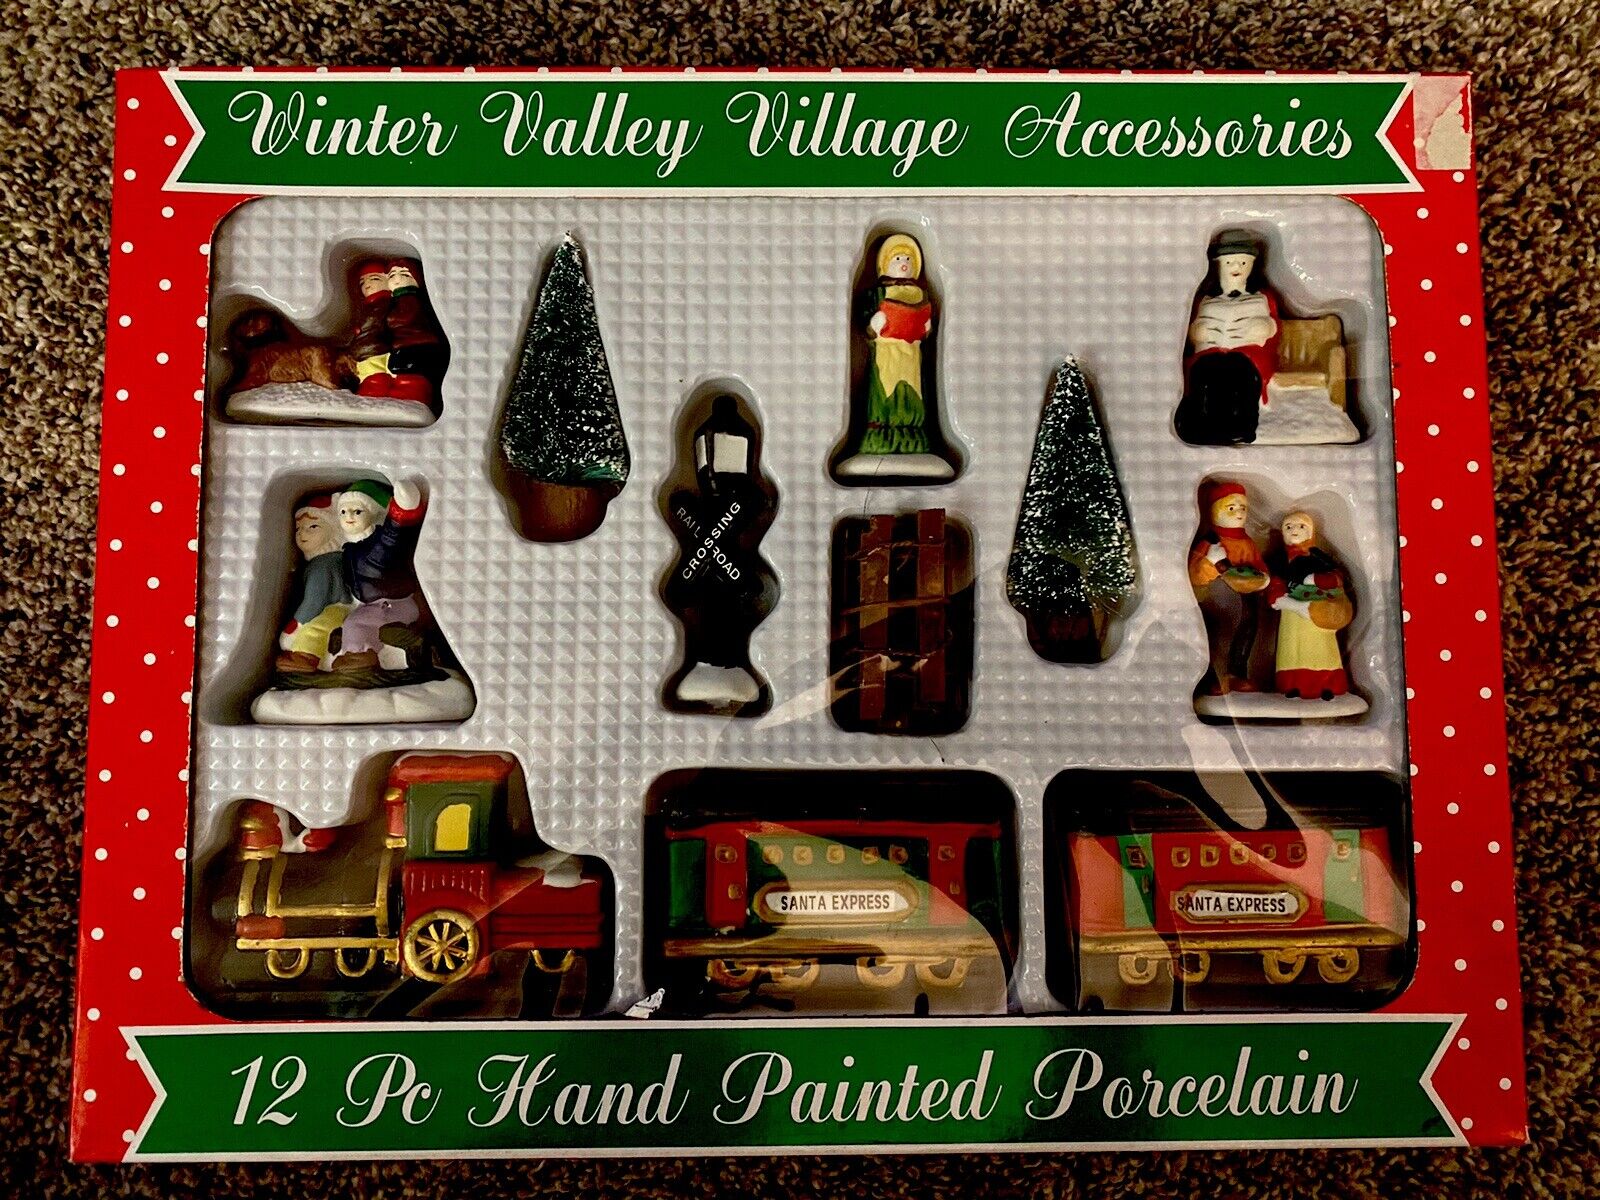 Vintage 12 Pc. Hand Painted Porcelain Christmas Winter Valley Village Scene